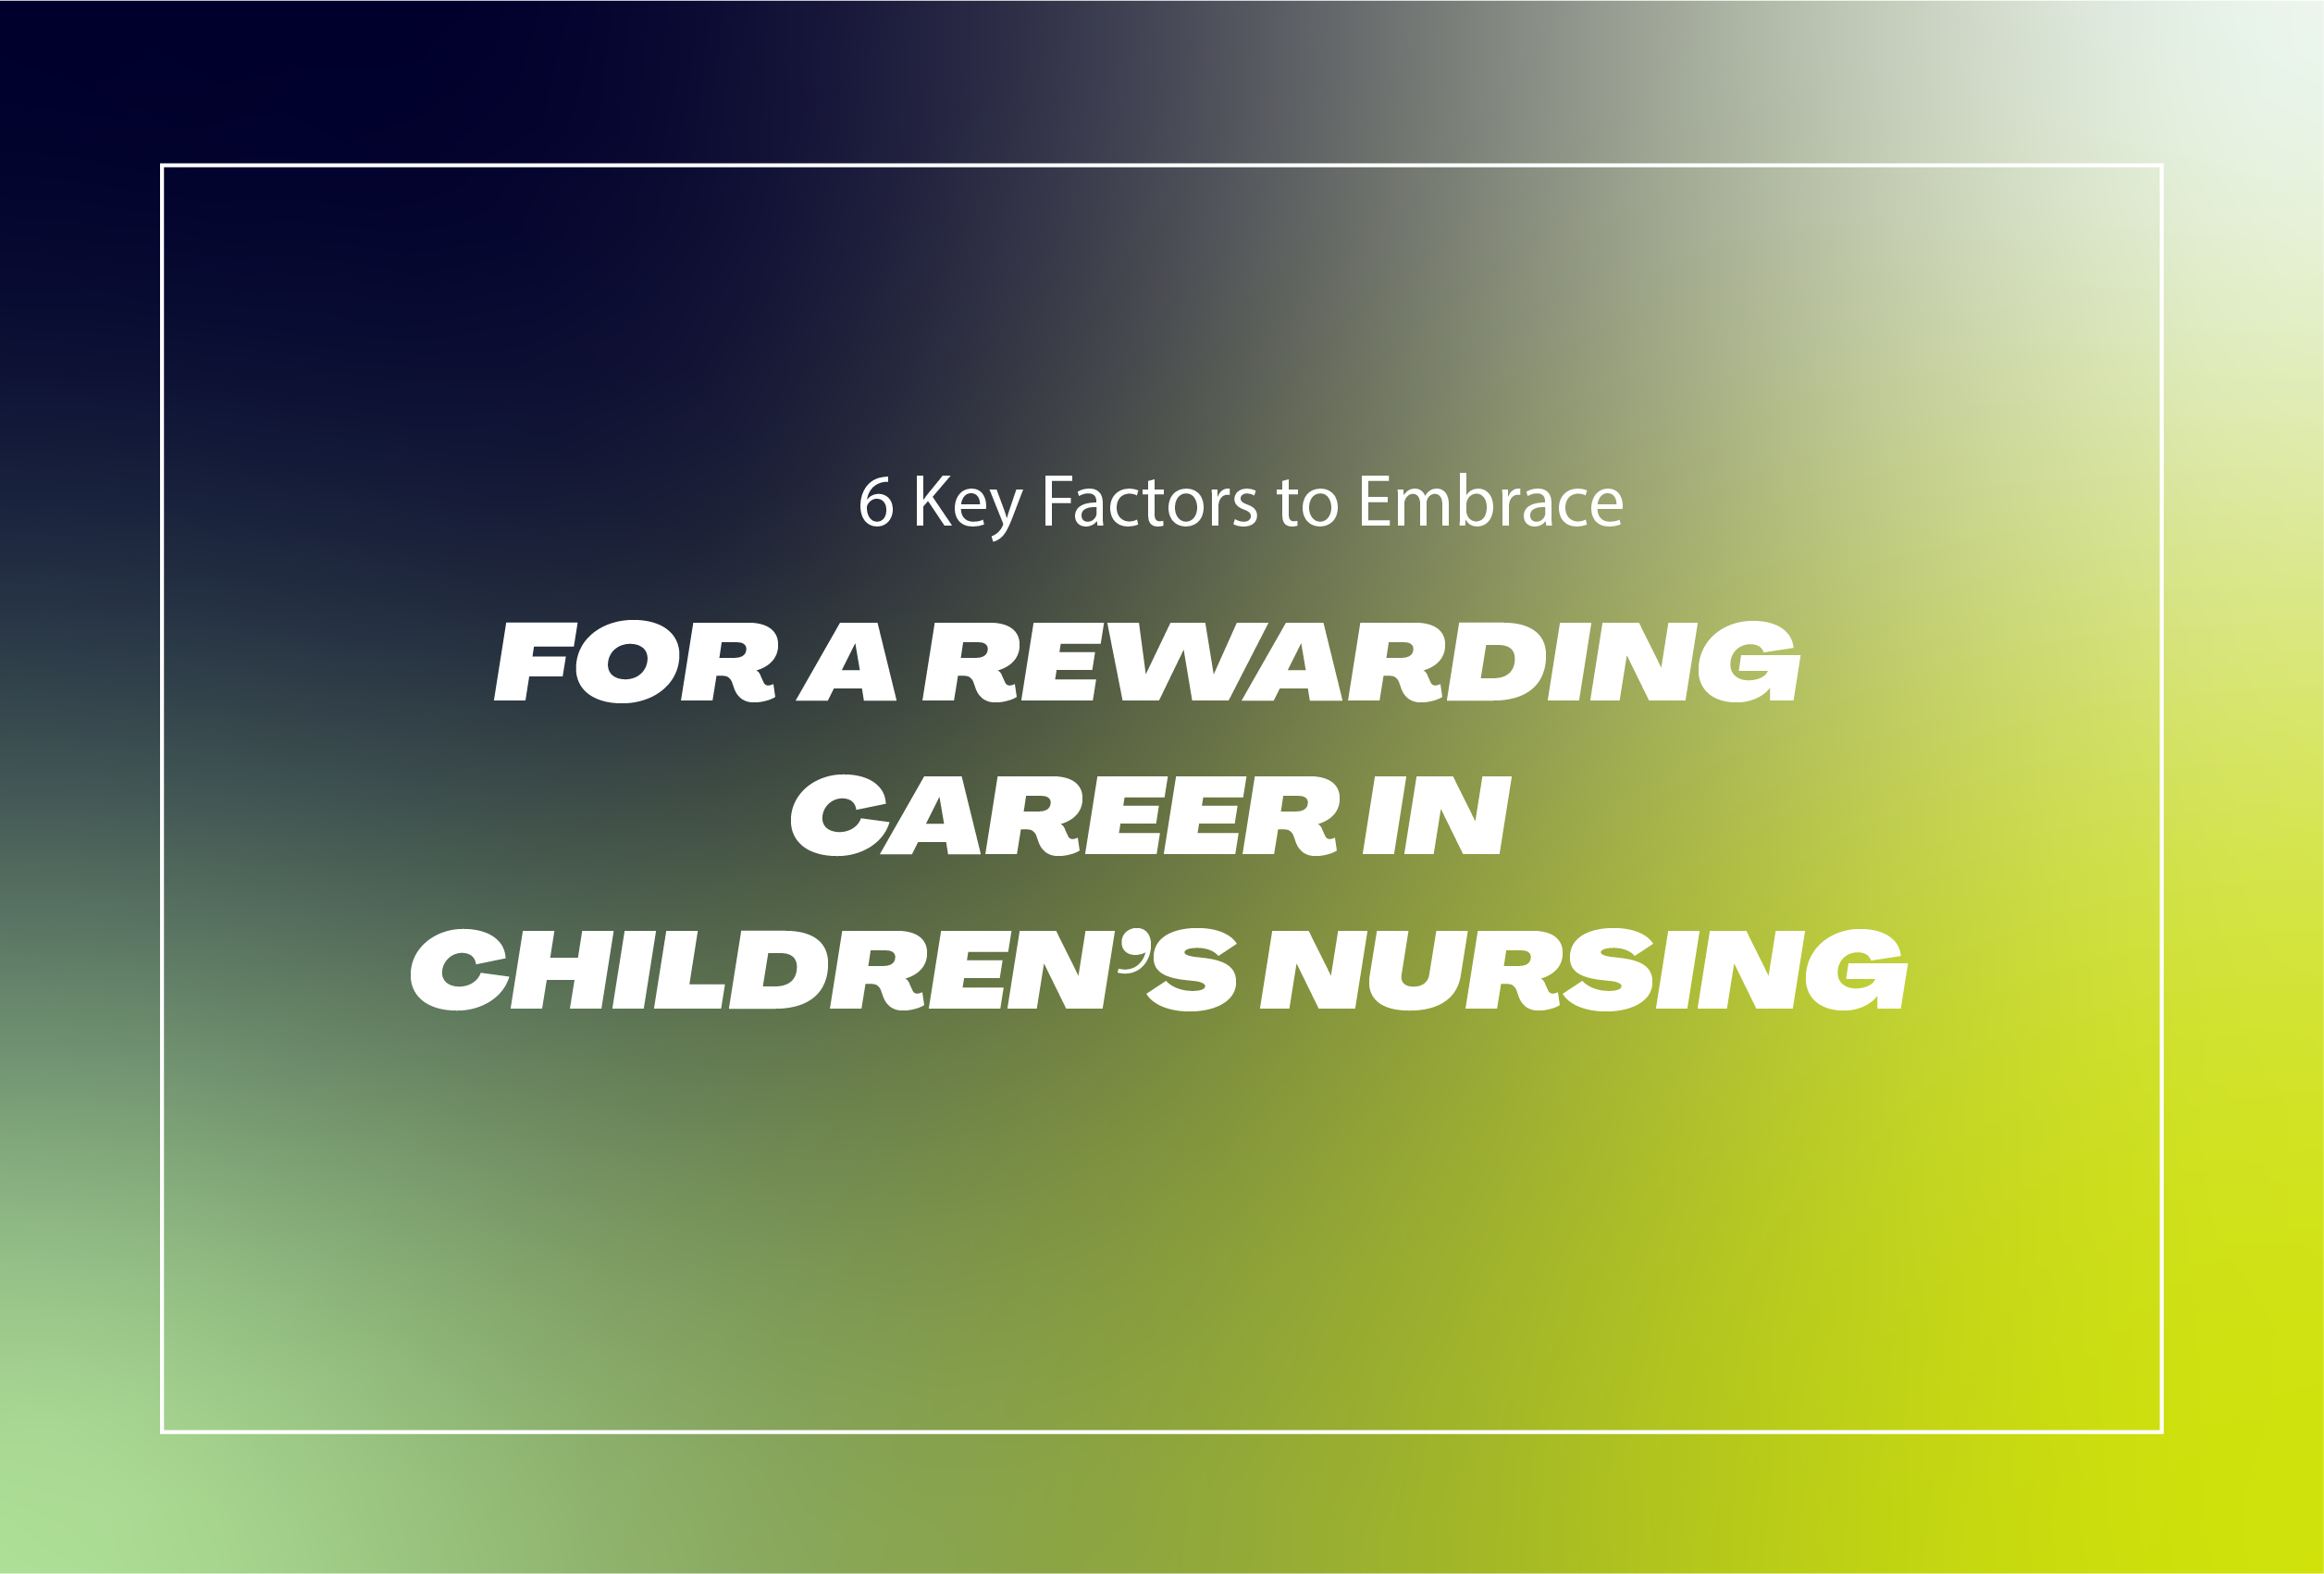 View 6 Key Factors to Embrace for a Rewarding Career in Children’s Nursing